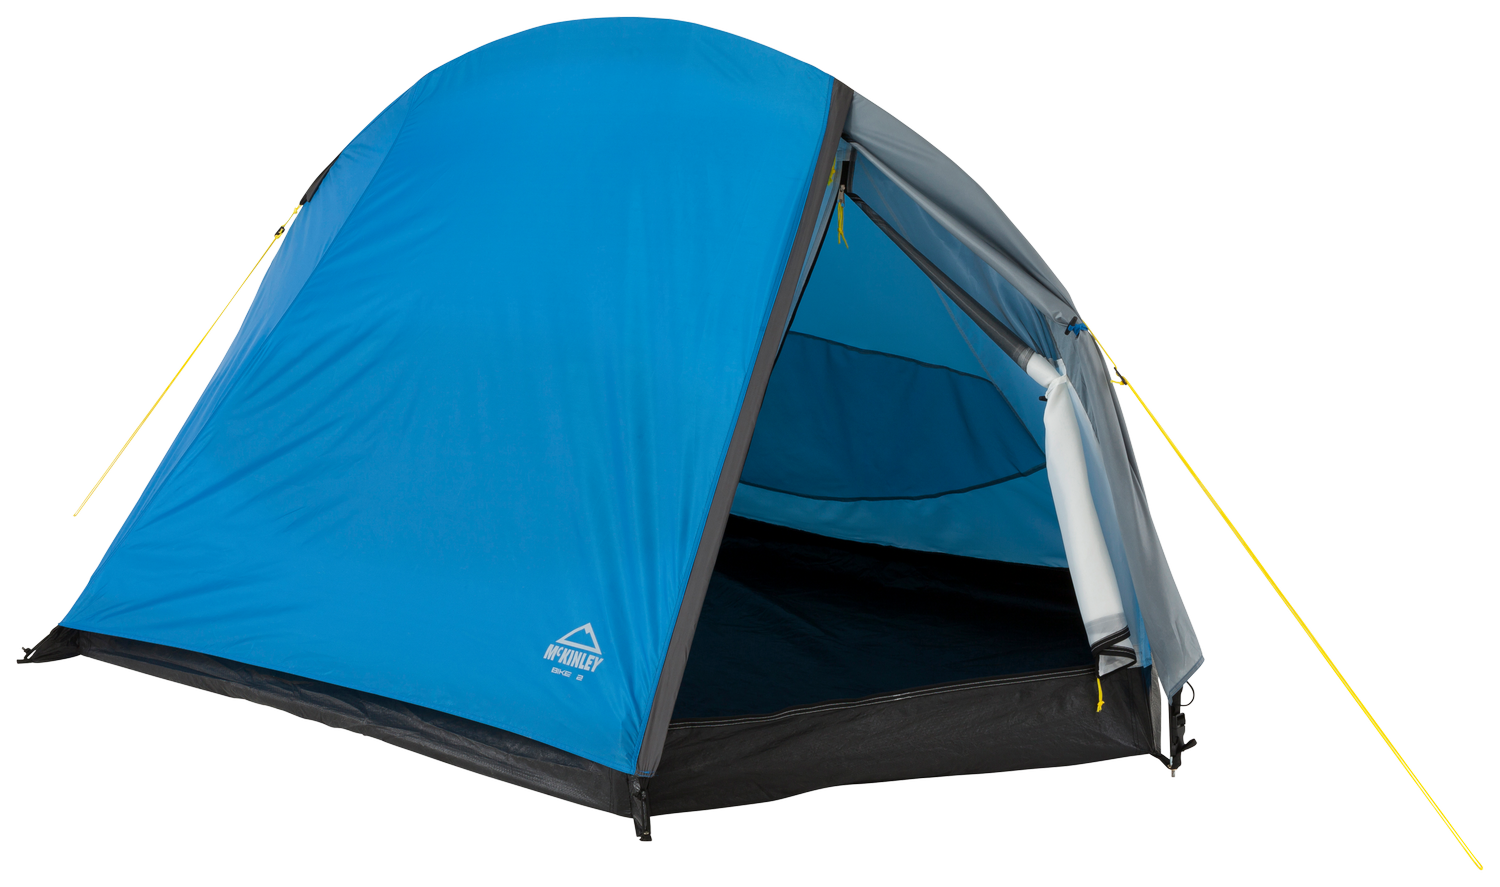 Mini Tent PNG Image